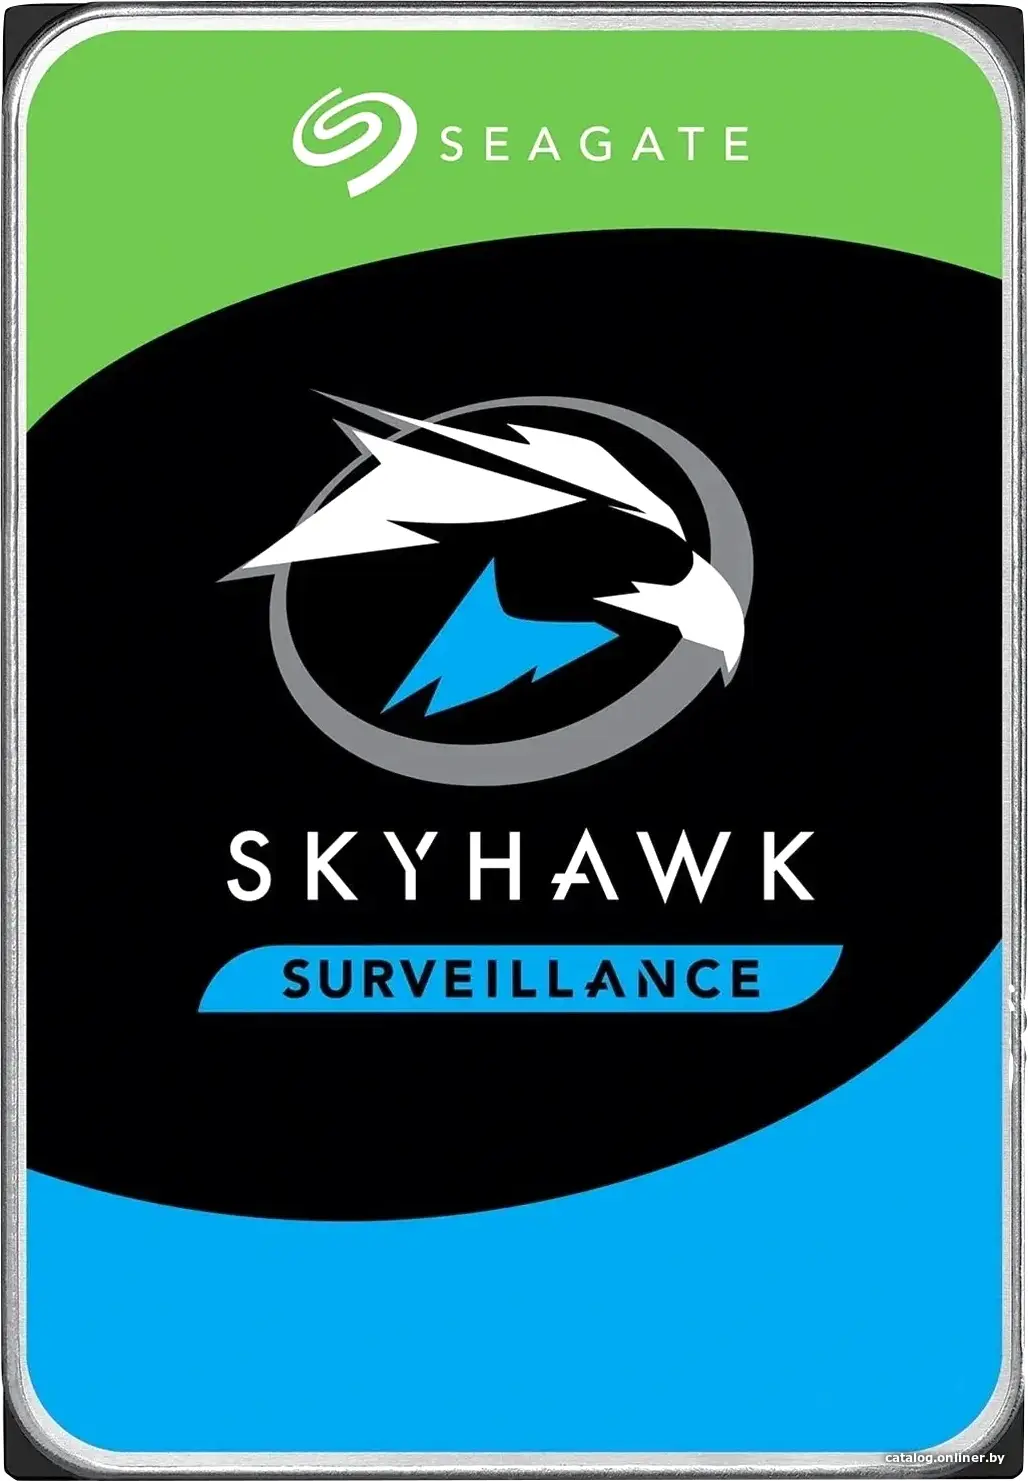 Купить Жесткий диск Seagate SATA-III 1TB ST1000VX013 Video Skyhawk (5400rpm) 256Mb 3.5', цена, опт и розница